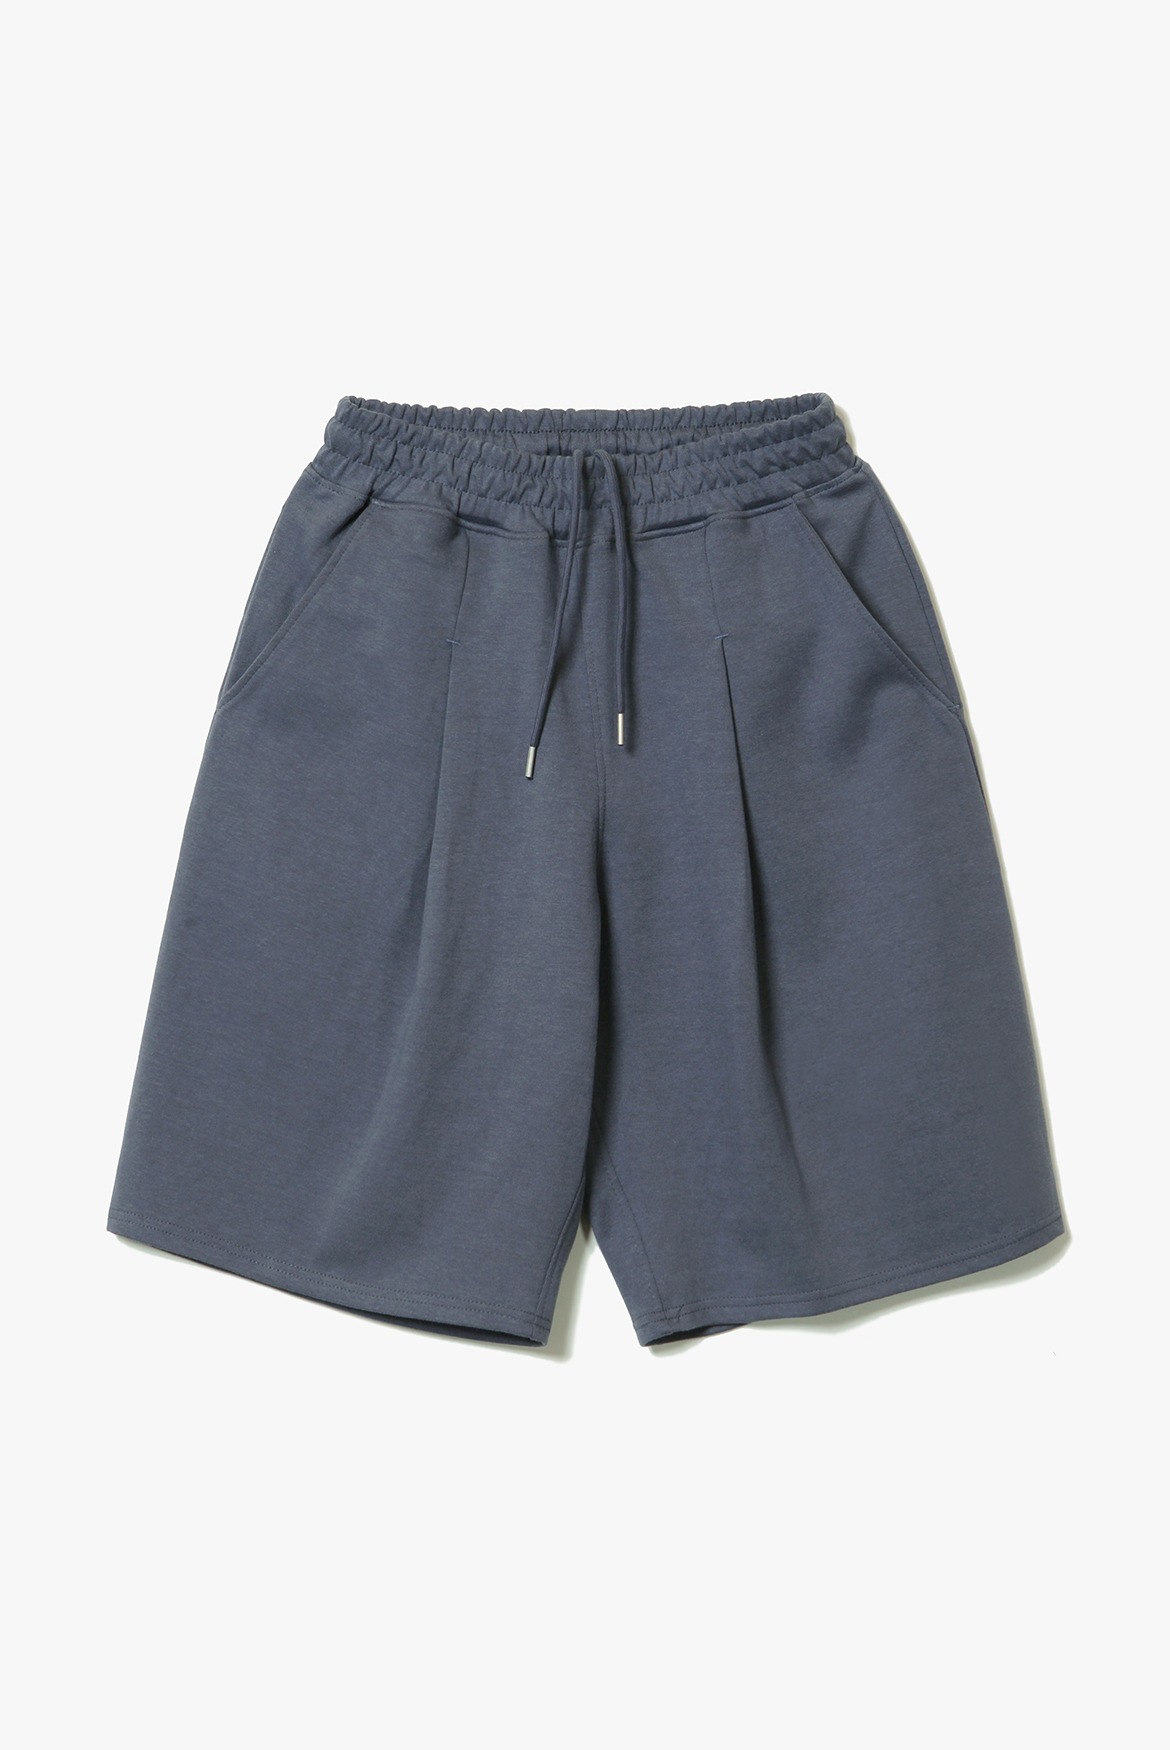 Deep One Tuck Sweat Shorts [Light Navy]